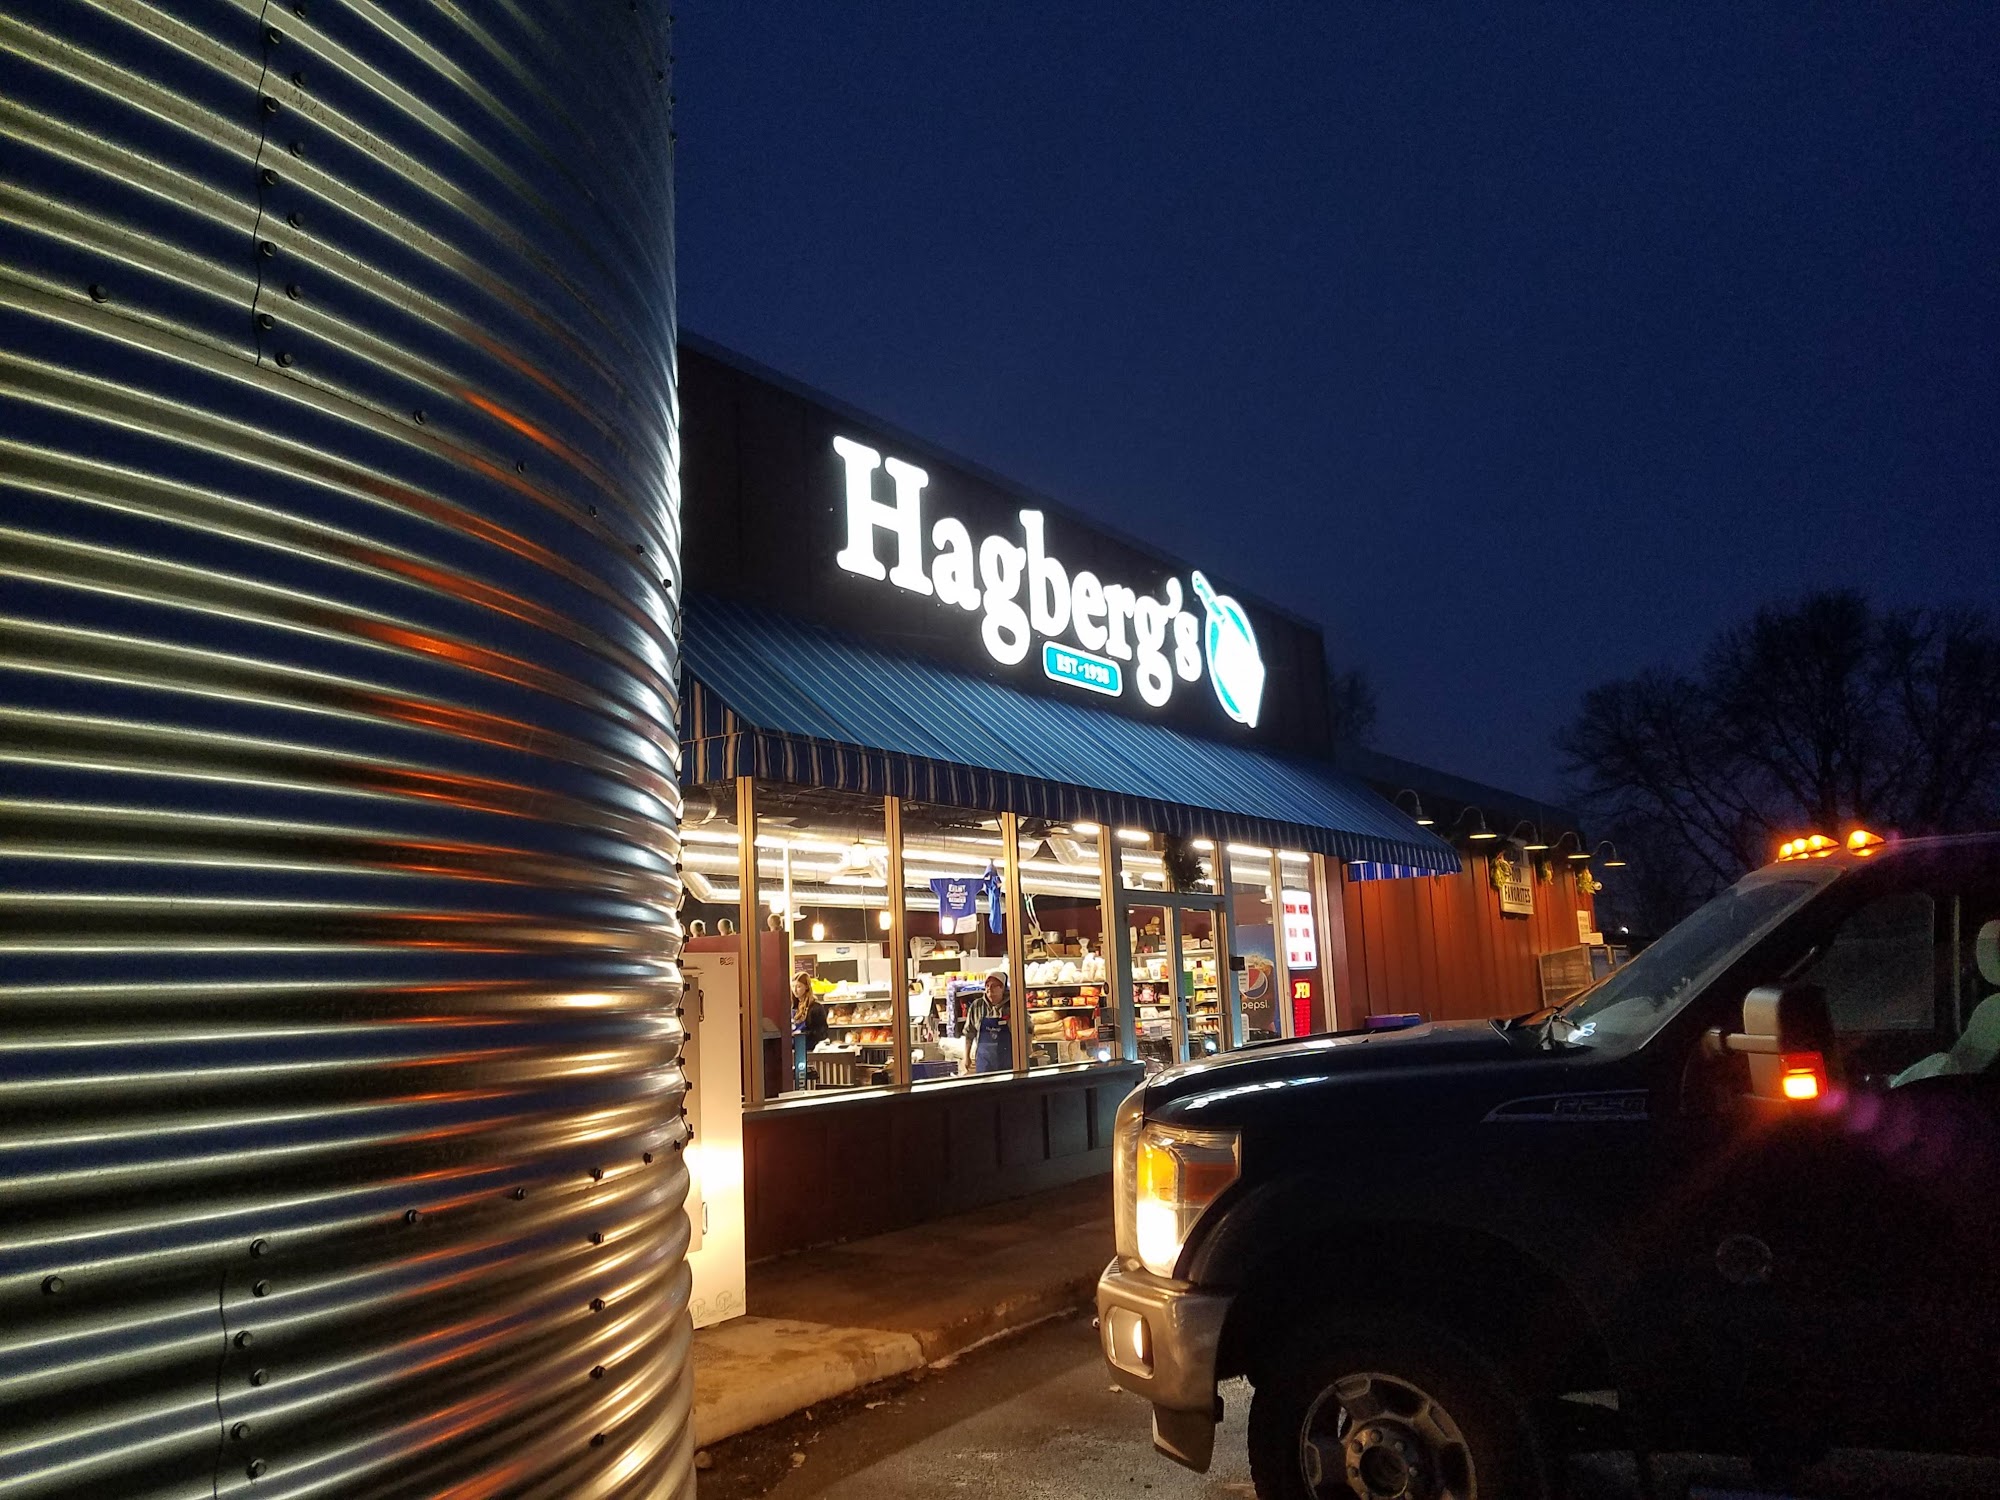 Hagberg’s Country Market